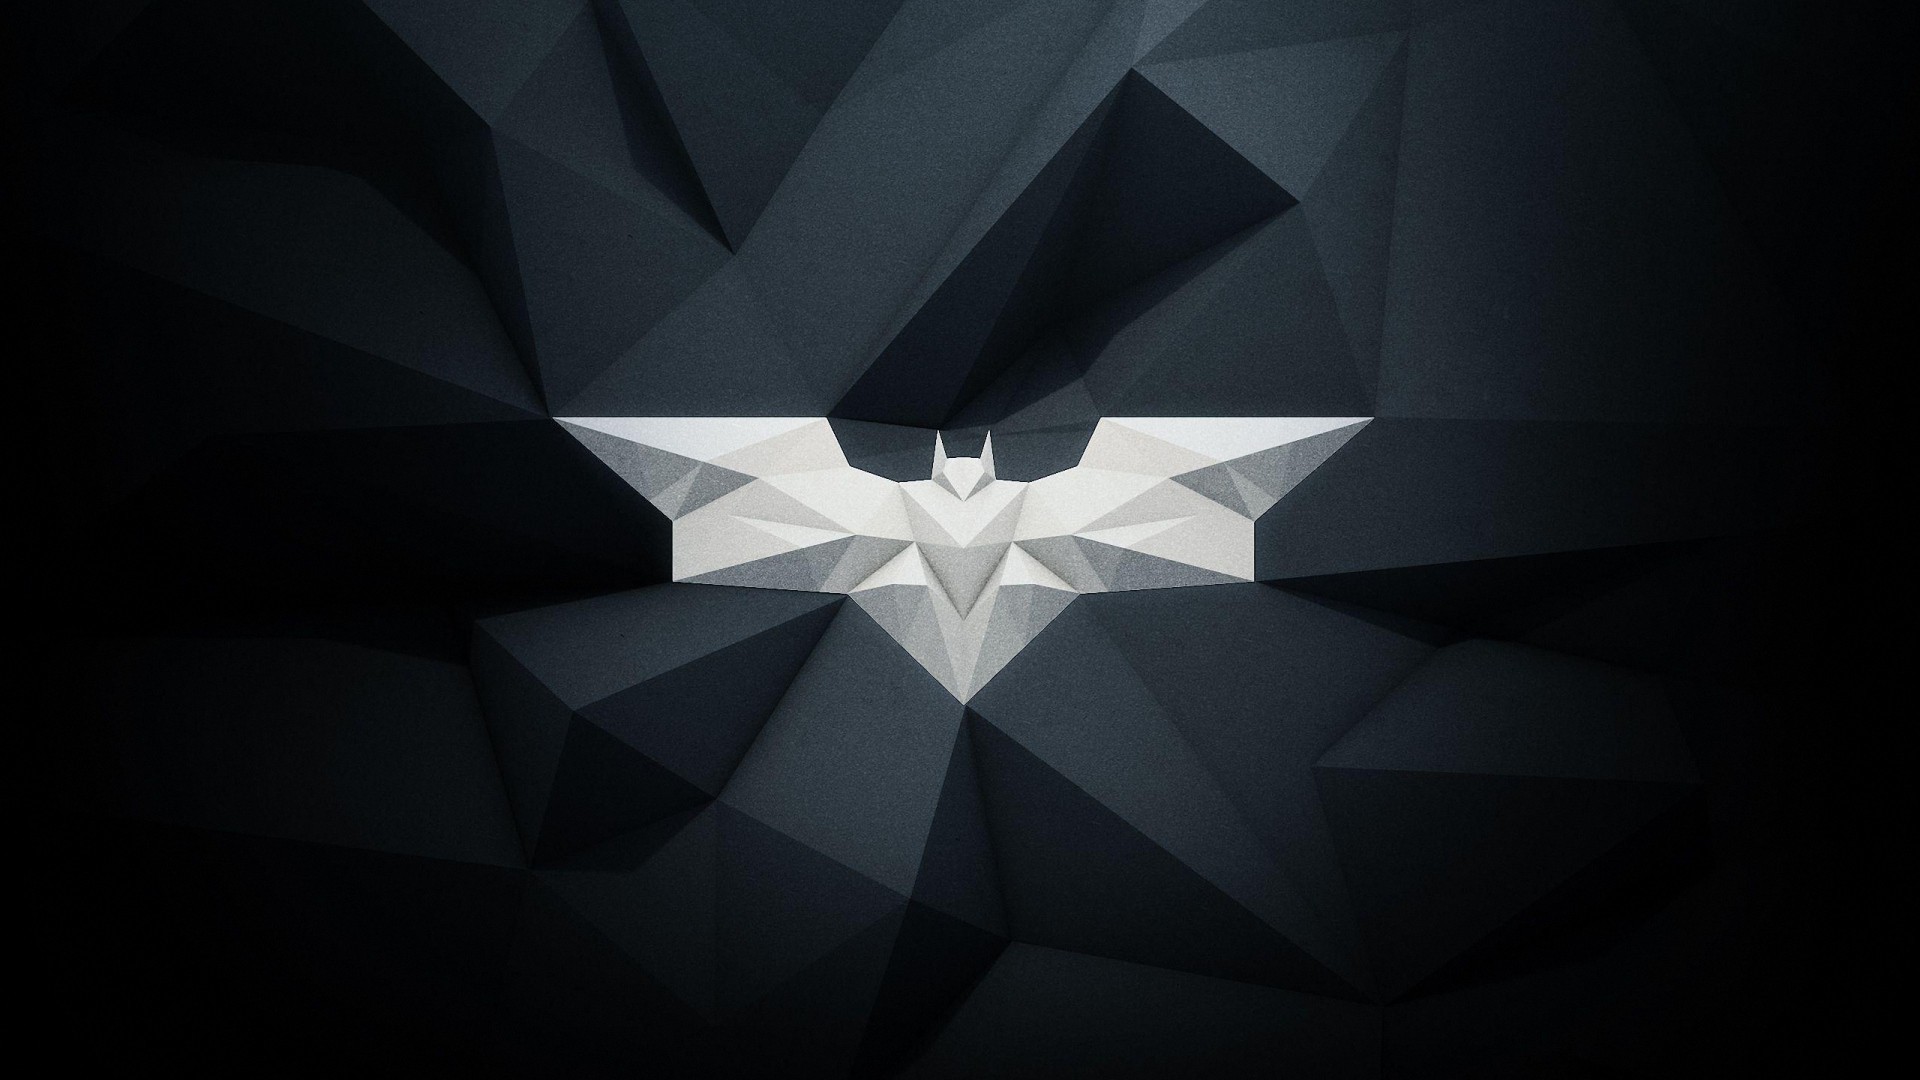 1920x1080 cool batman logo design backgrounds - full hd wallpapers